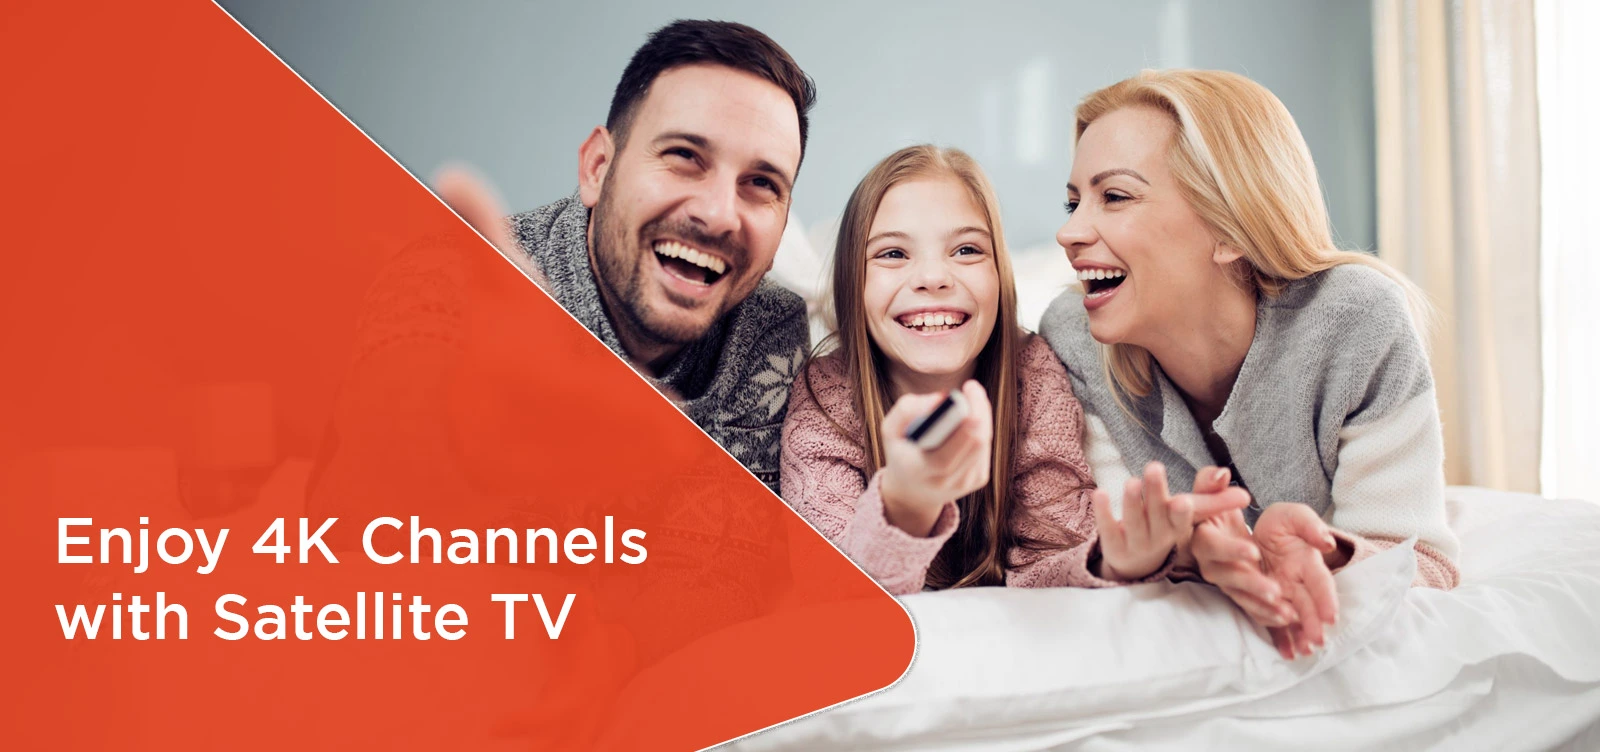 Enjoy 4K Channels with Satellite TV